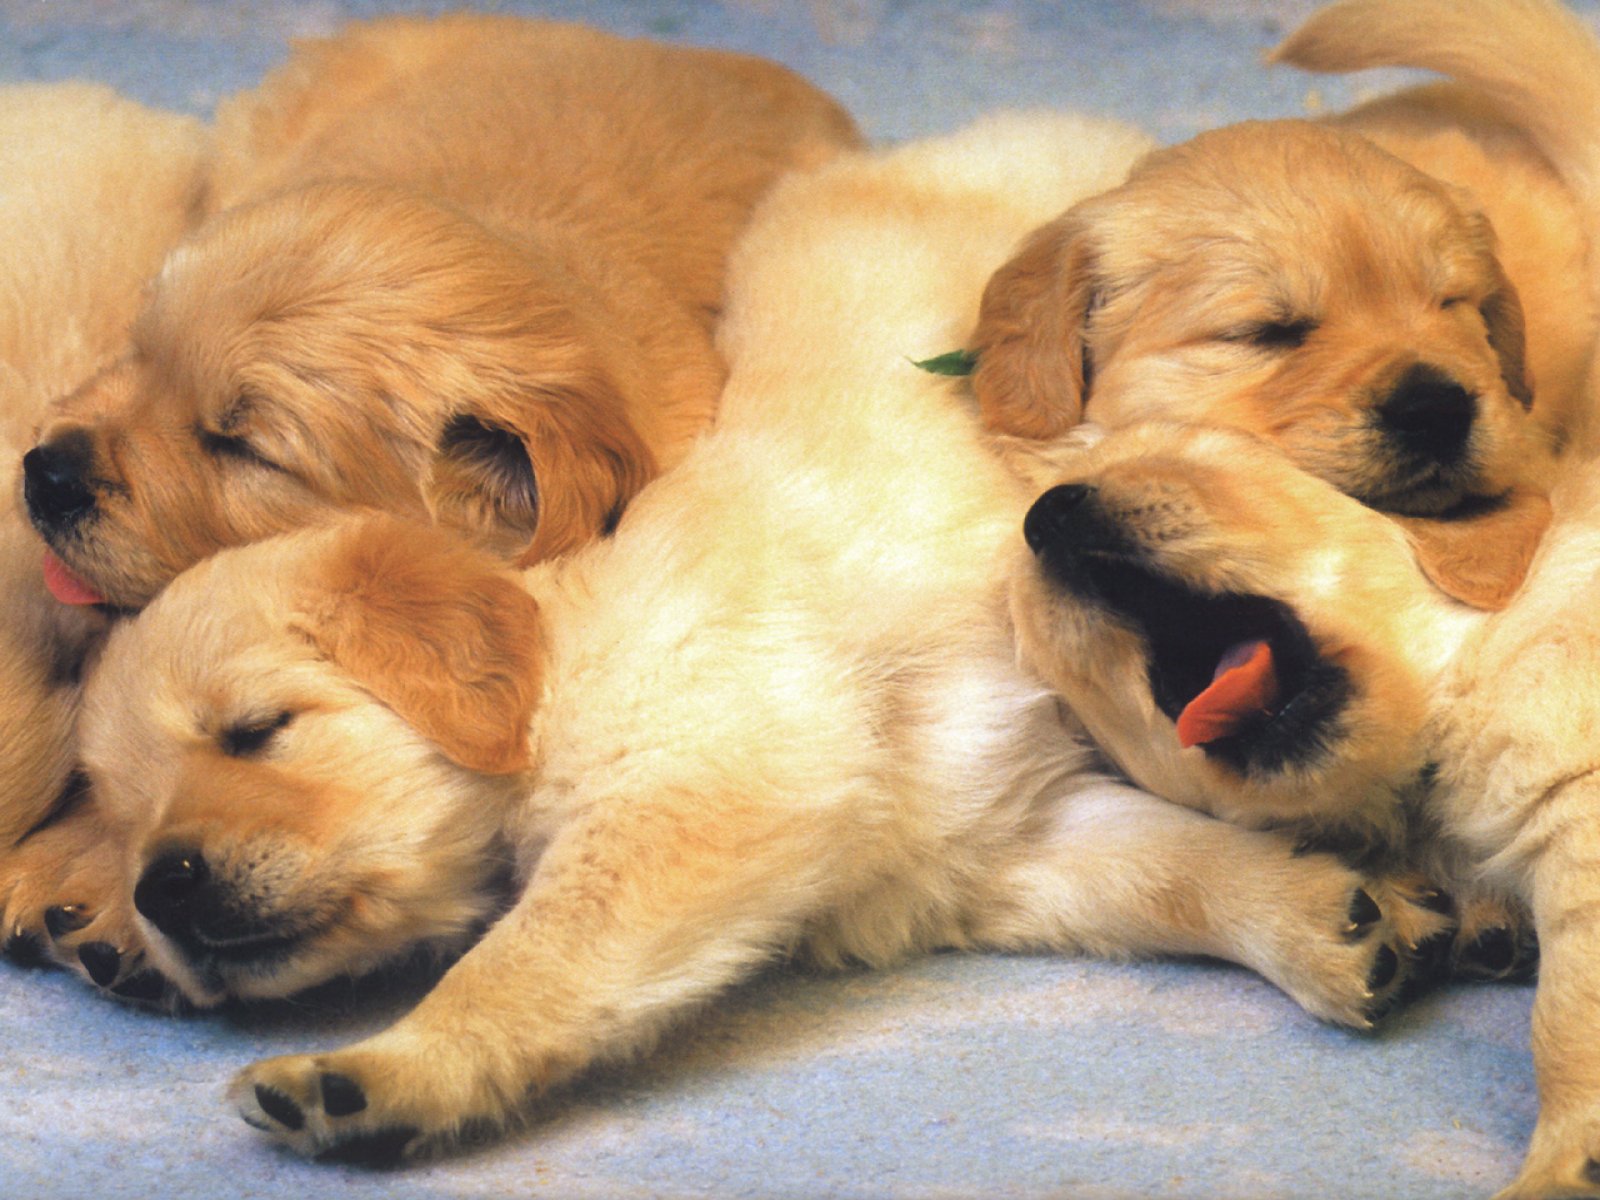  A Pile Of Puppies   dog puppies wallpaper computer desktop 1600x1200